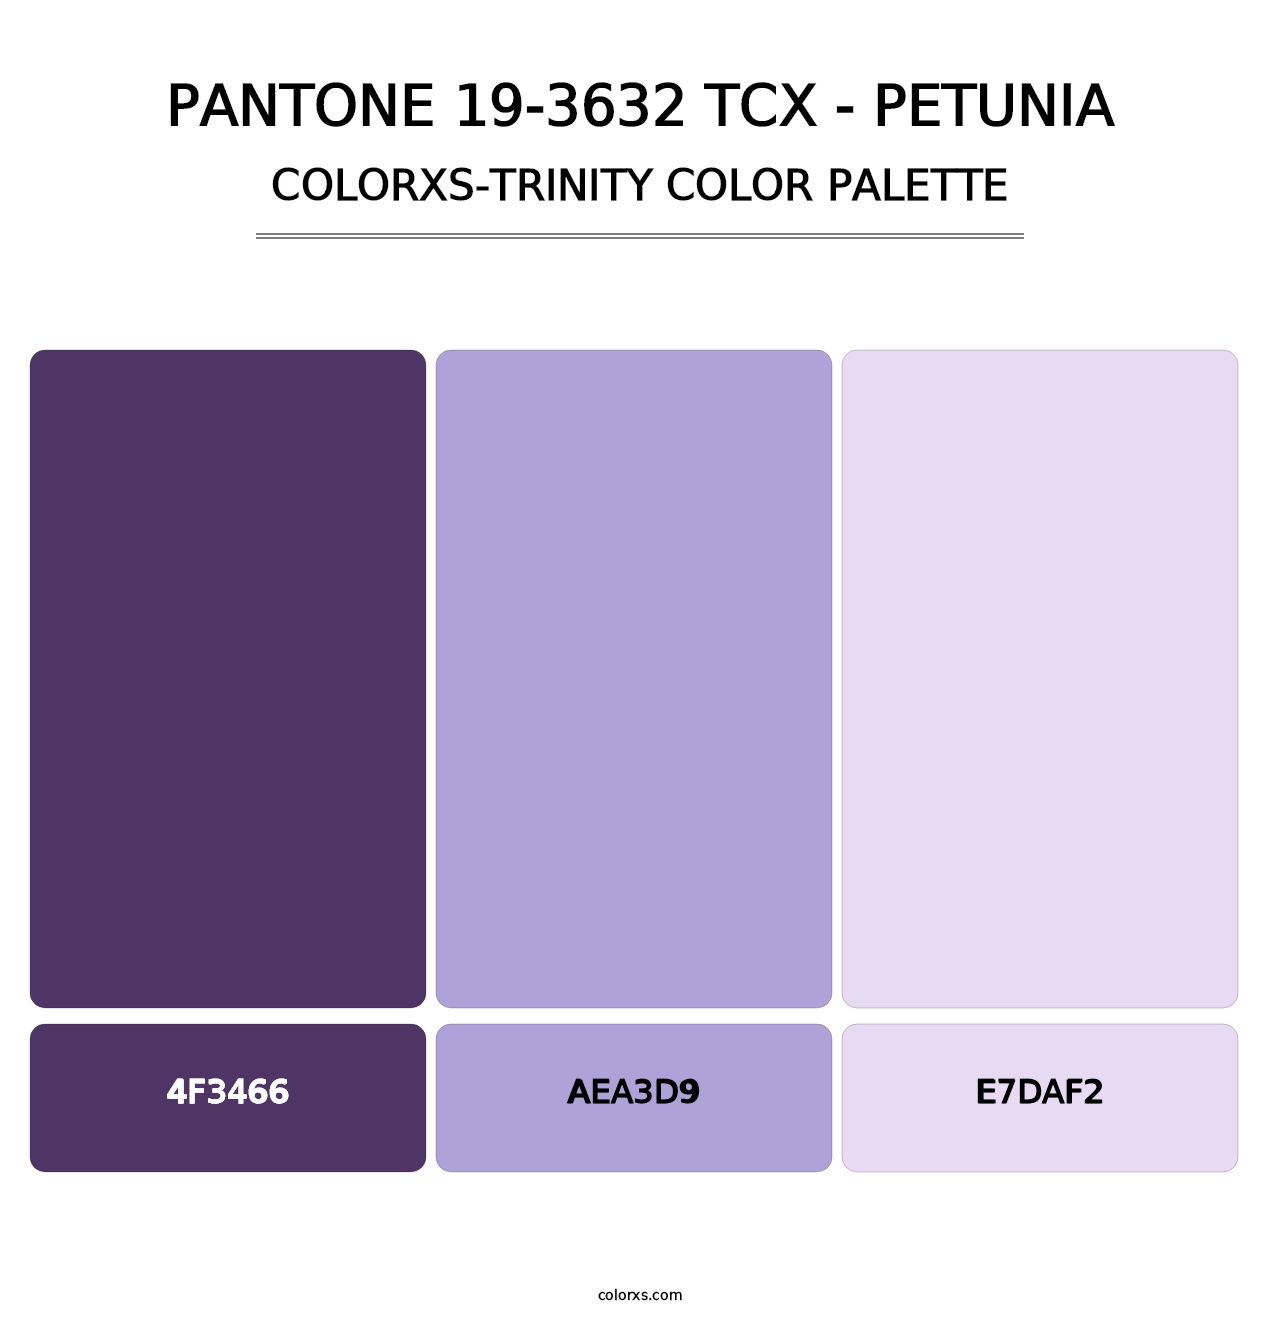 PANTONE 19-3632 TCX - Petunia - Colorxs Trinity Palette